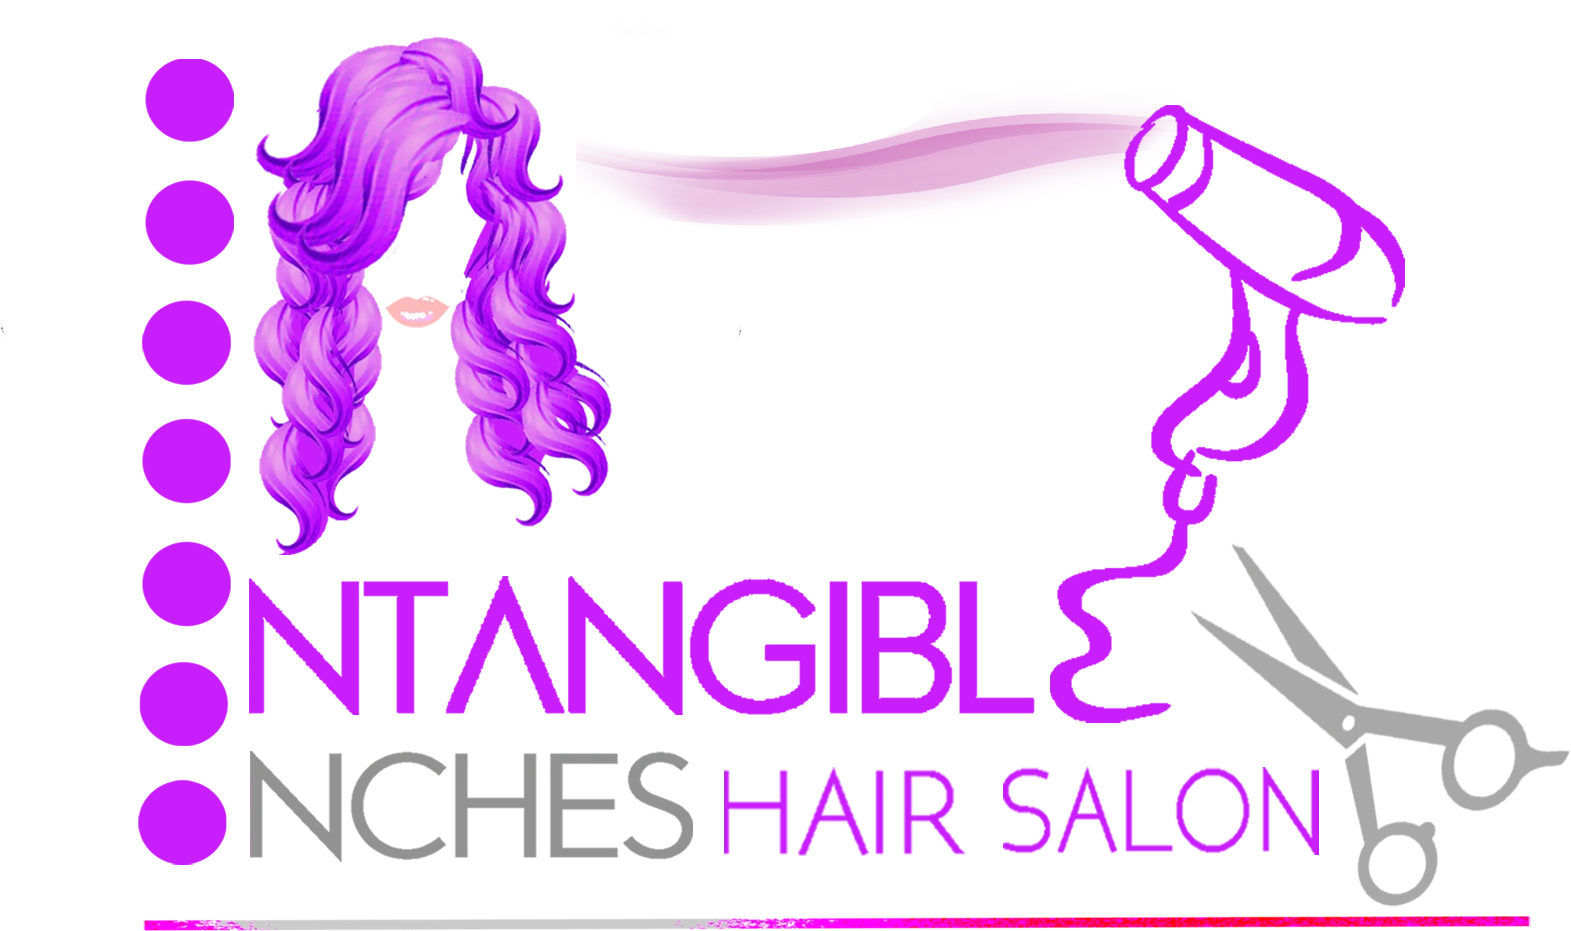 Intangible Inches Hair Salon Logo